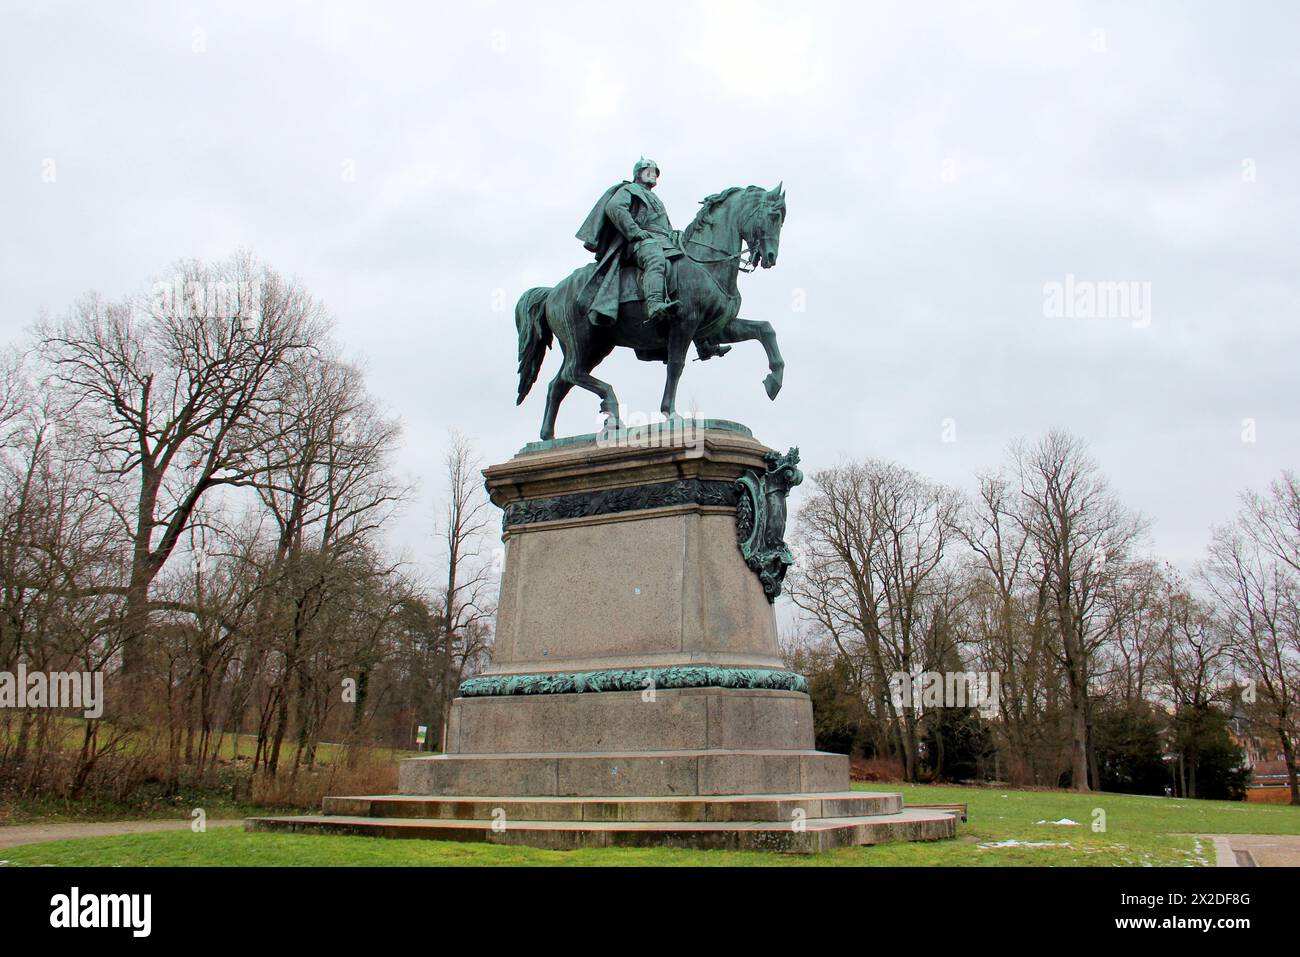 Equestrian statue of Herzog Ernst II, sculptural work by Gustav Eberlein, installed in 1899, in Hofgarten facing Schlossplatz, Coburg, Germany Stock Photo